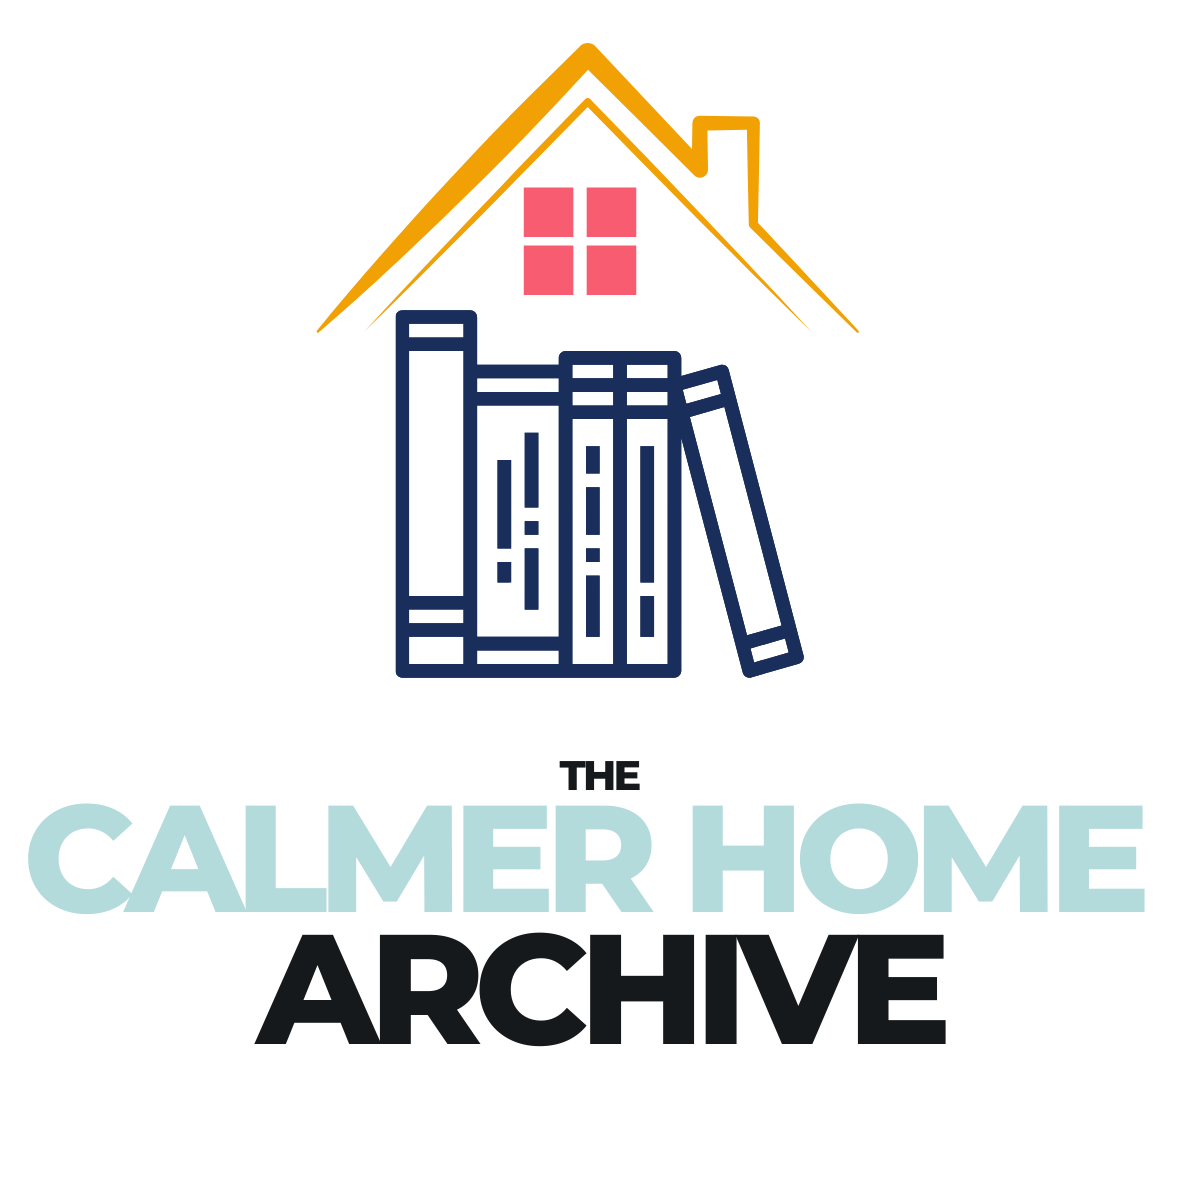 The Calmer Home Archive